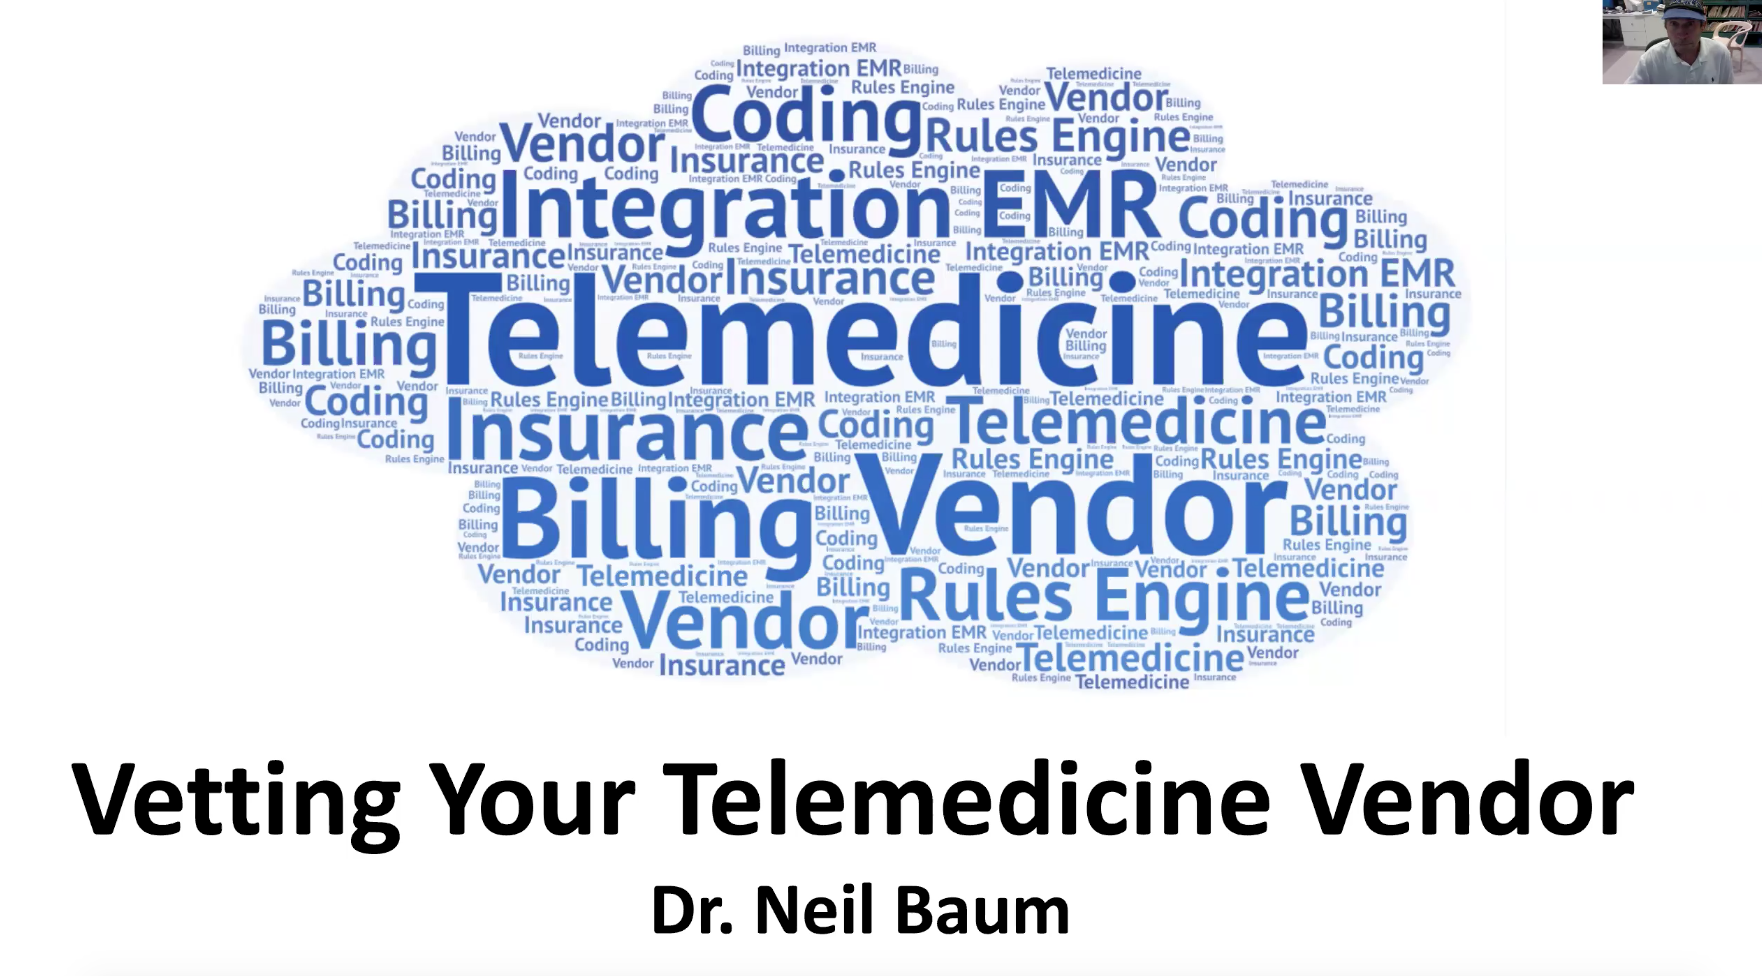 How to vet a telemedicine vendor